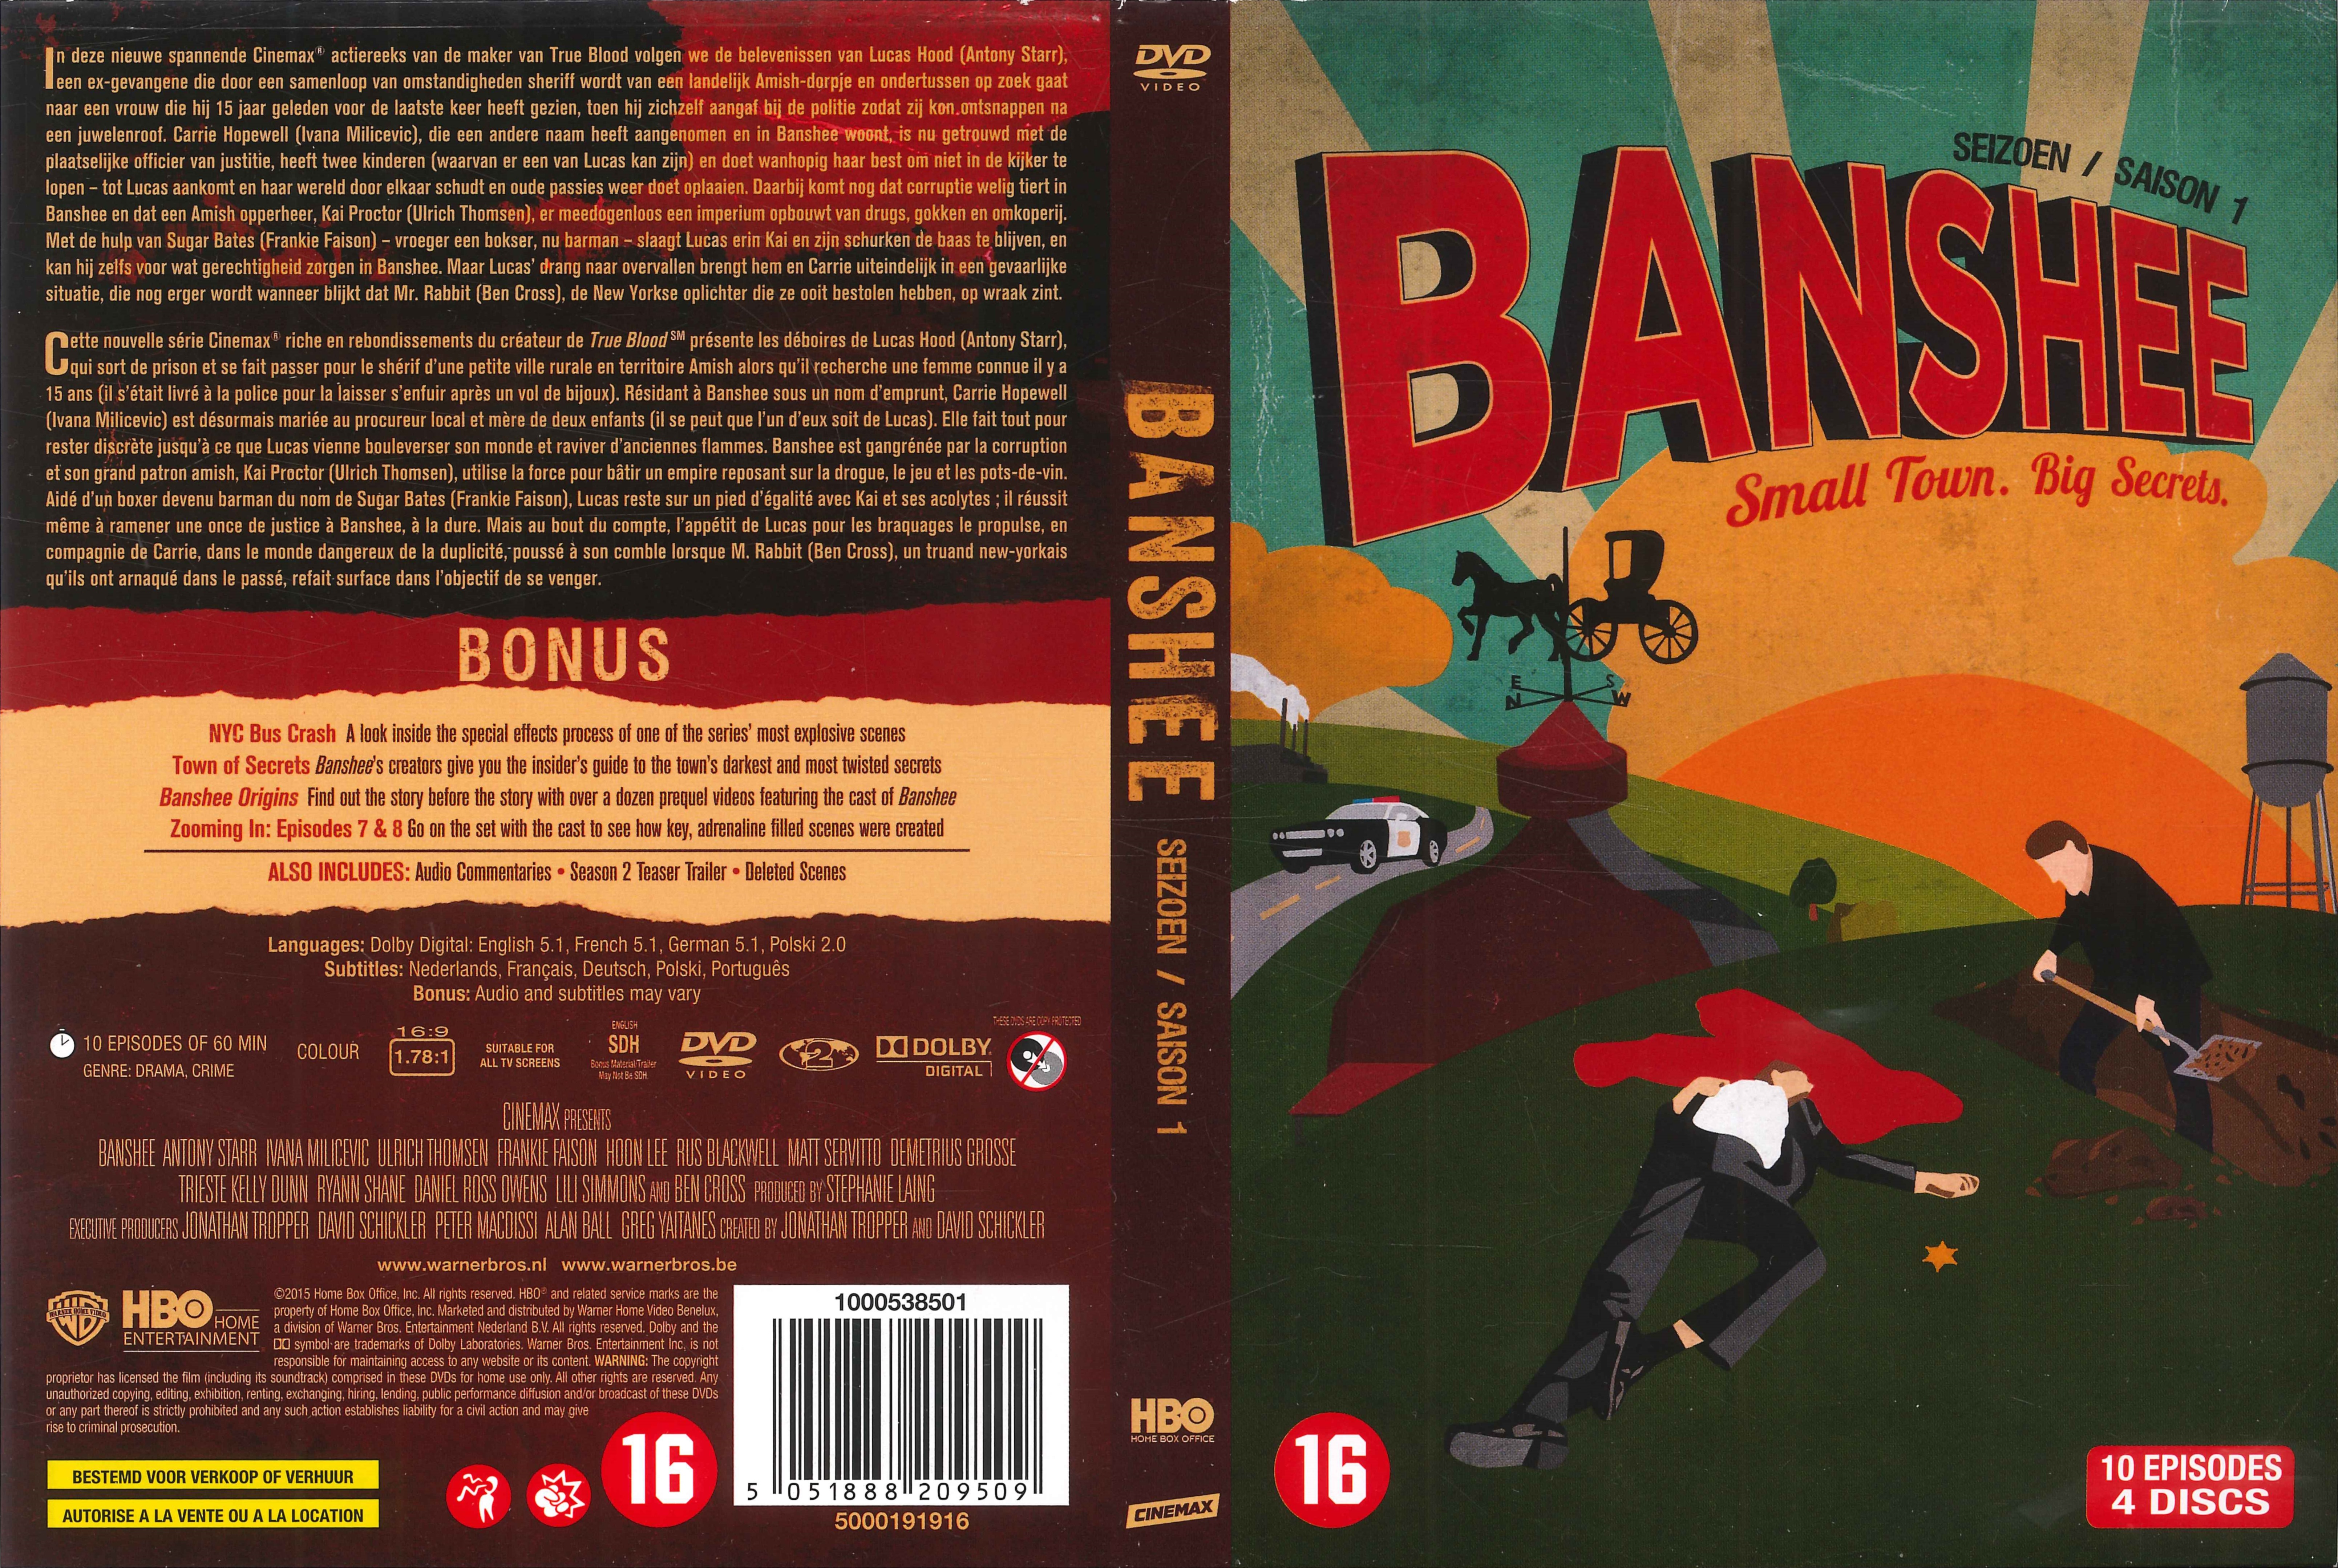 Jaquette DVD Banshee saison 1 v2